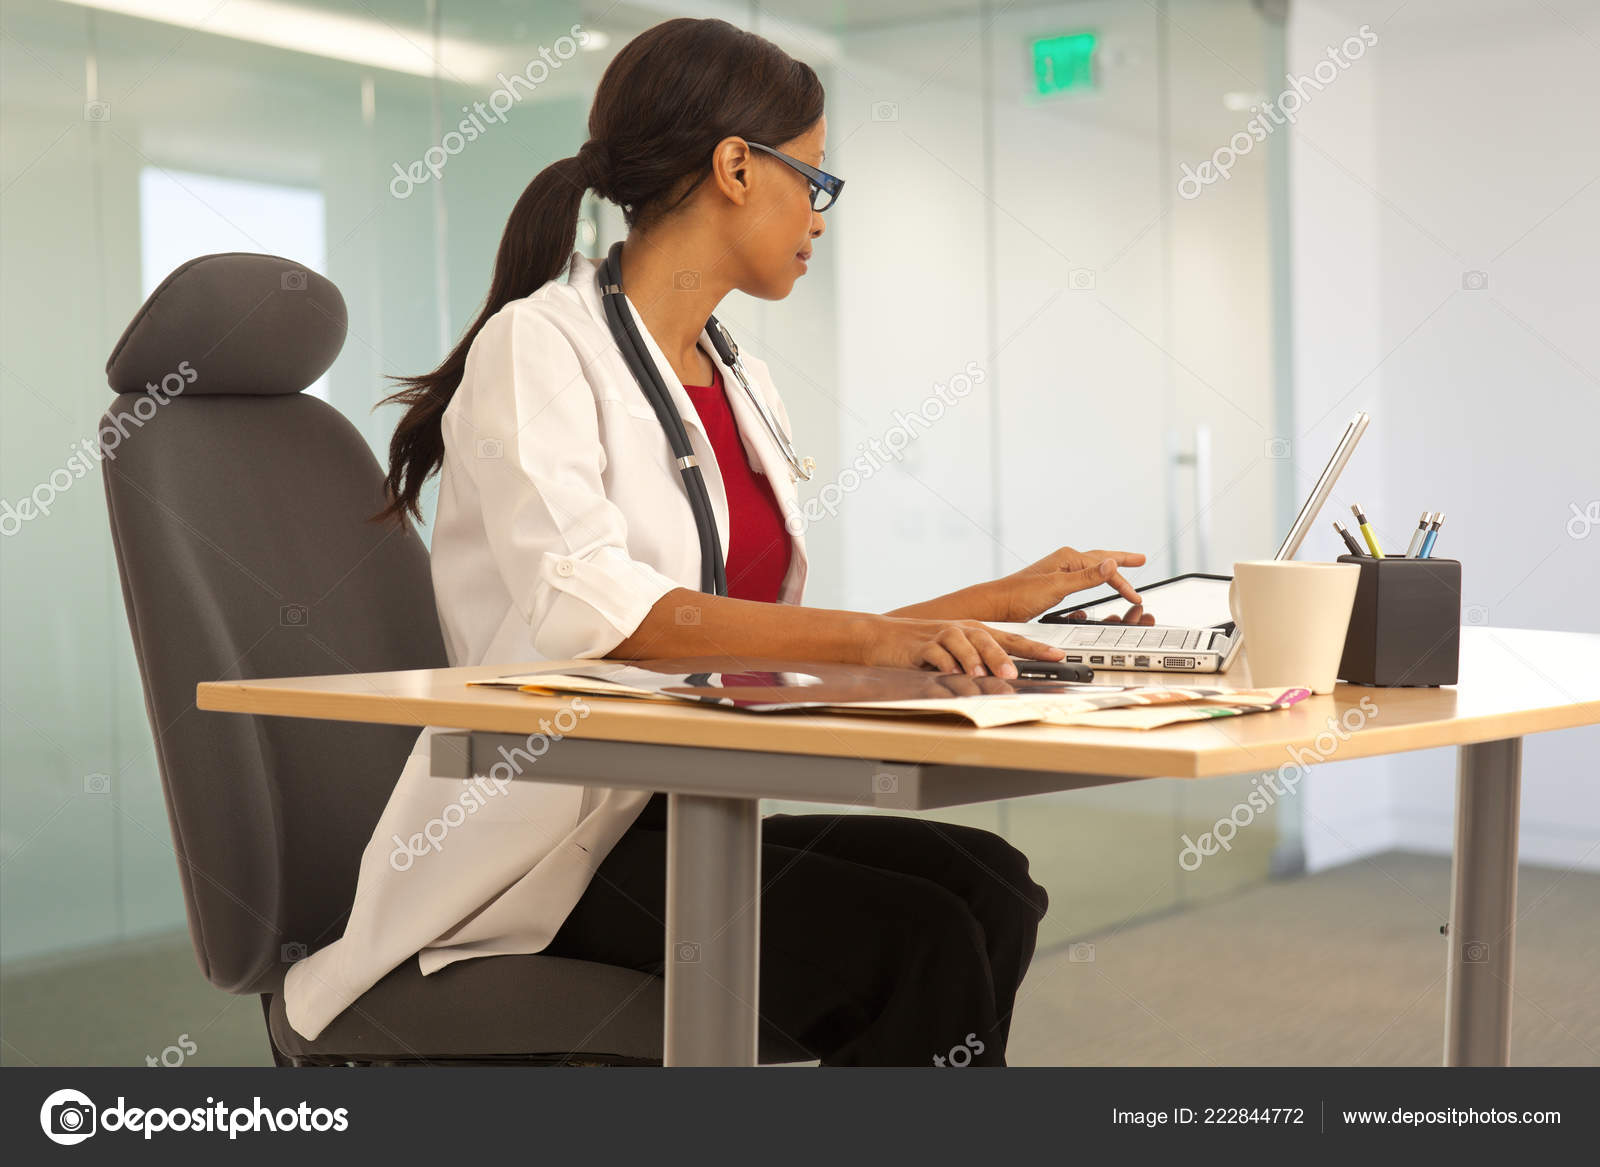 Professional Female Medical Doctor Working Her Desk Using Laptop